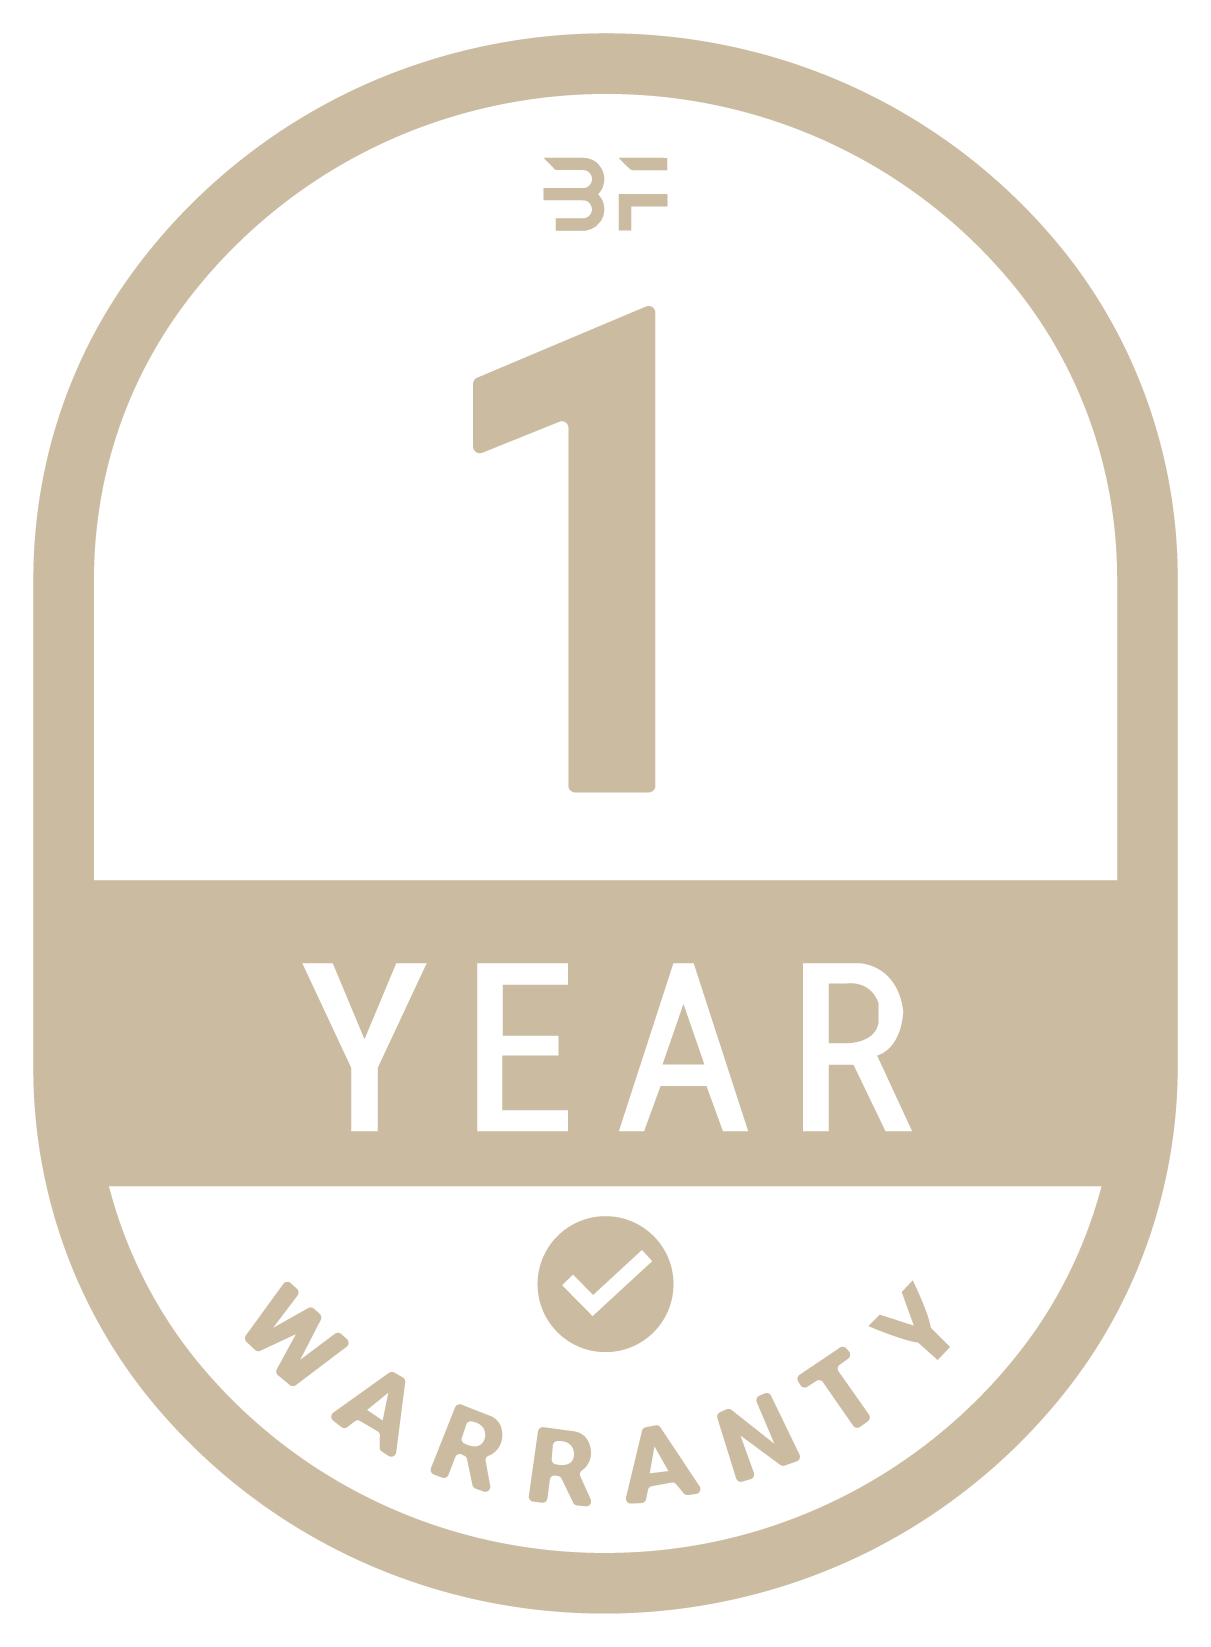 Extended 1-year warranty